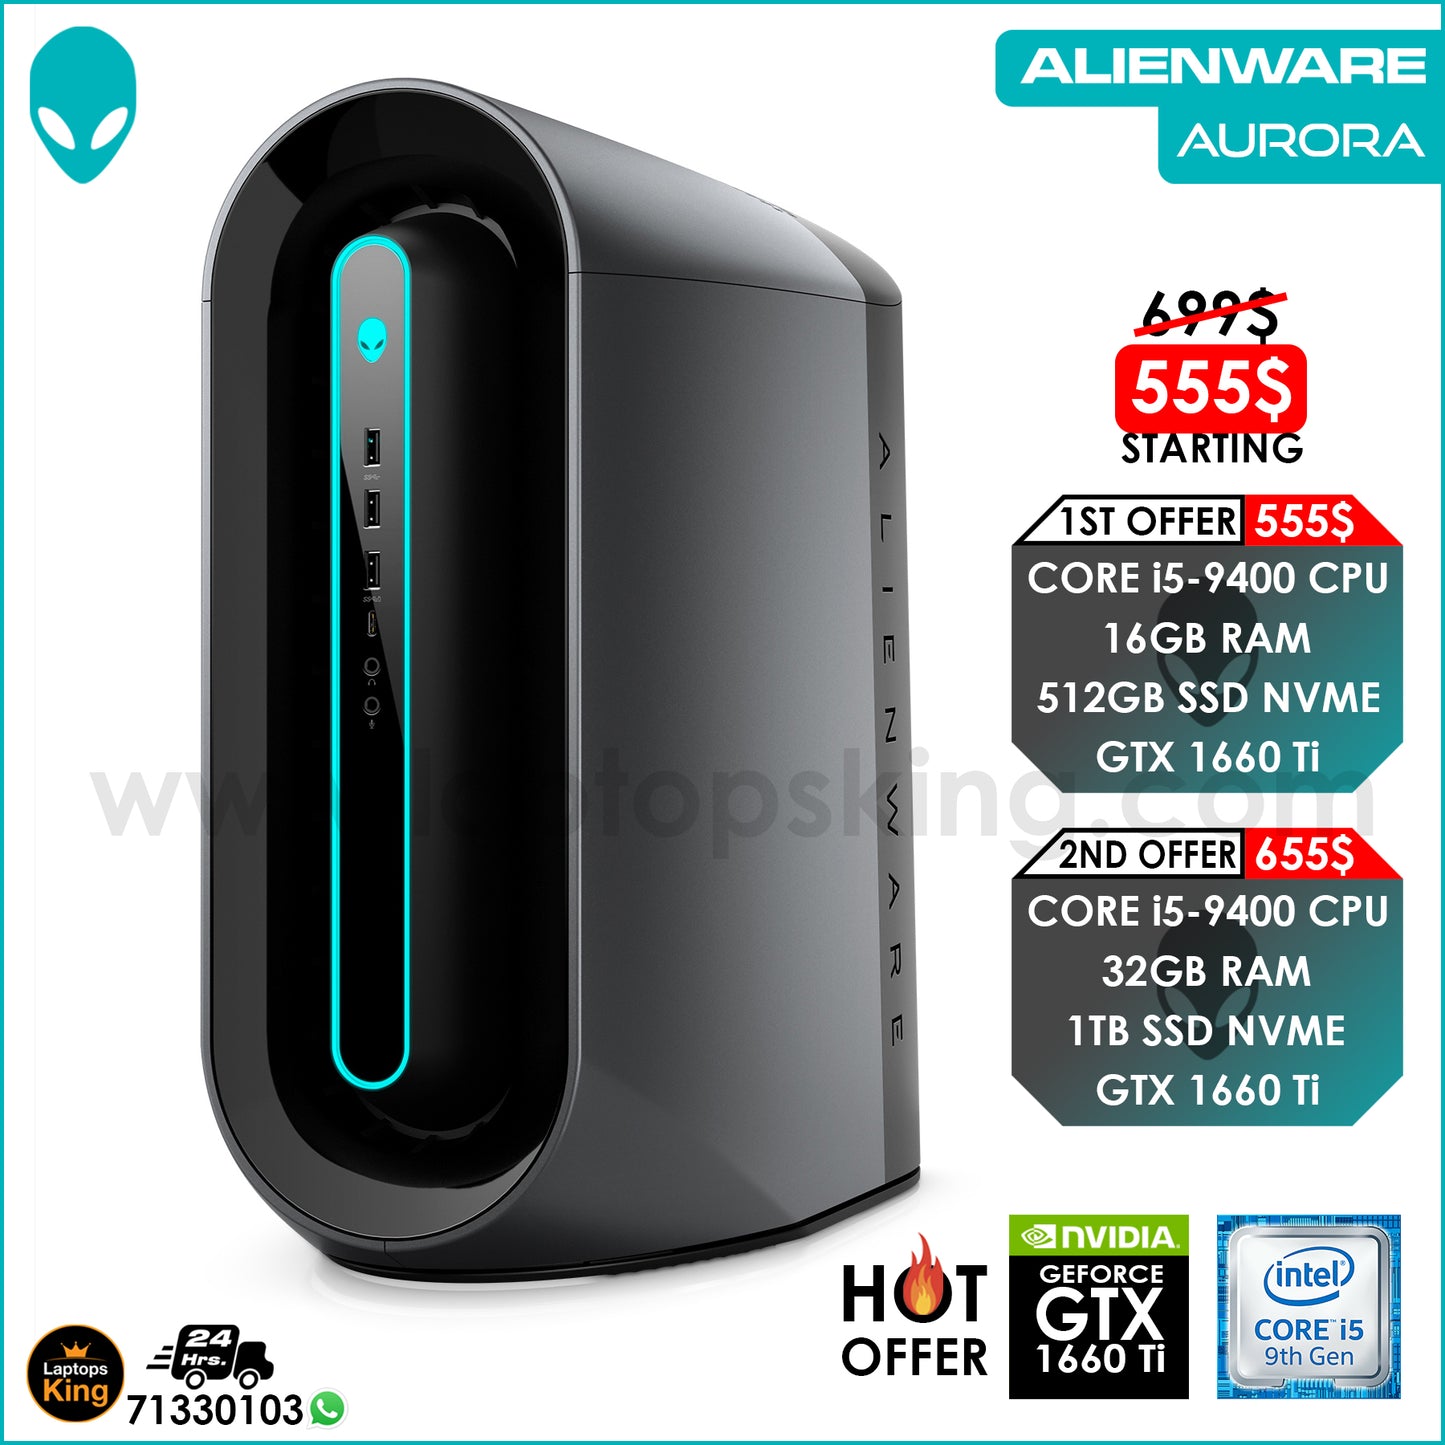 Alienware Aurora Core i5-9400 Gtx 1660 Ti Modern Gaming Desktops (Open Box)